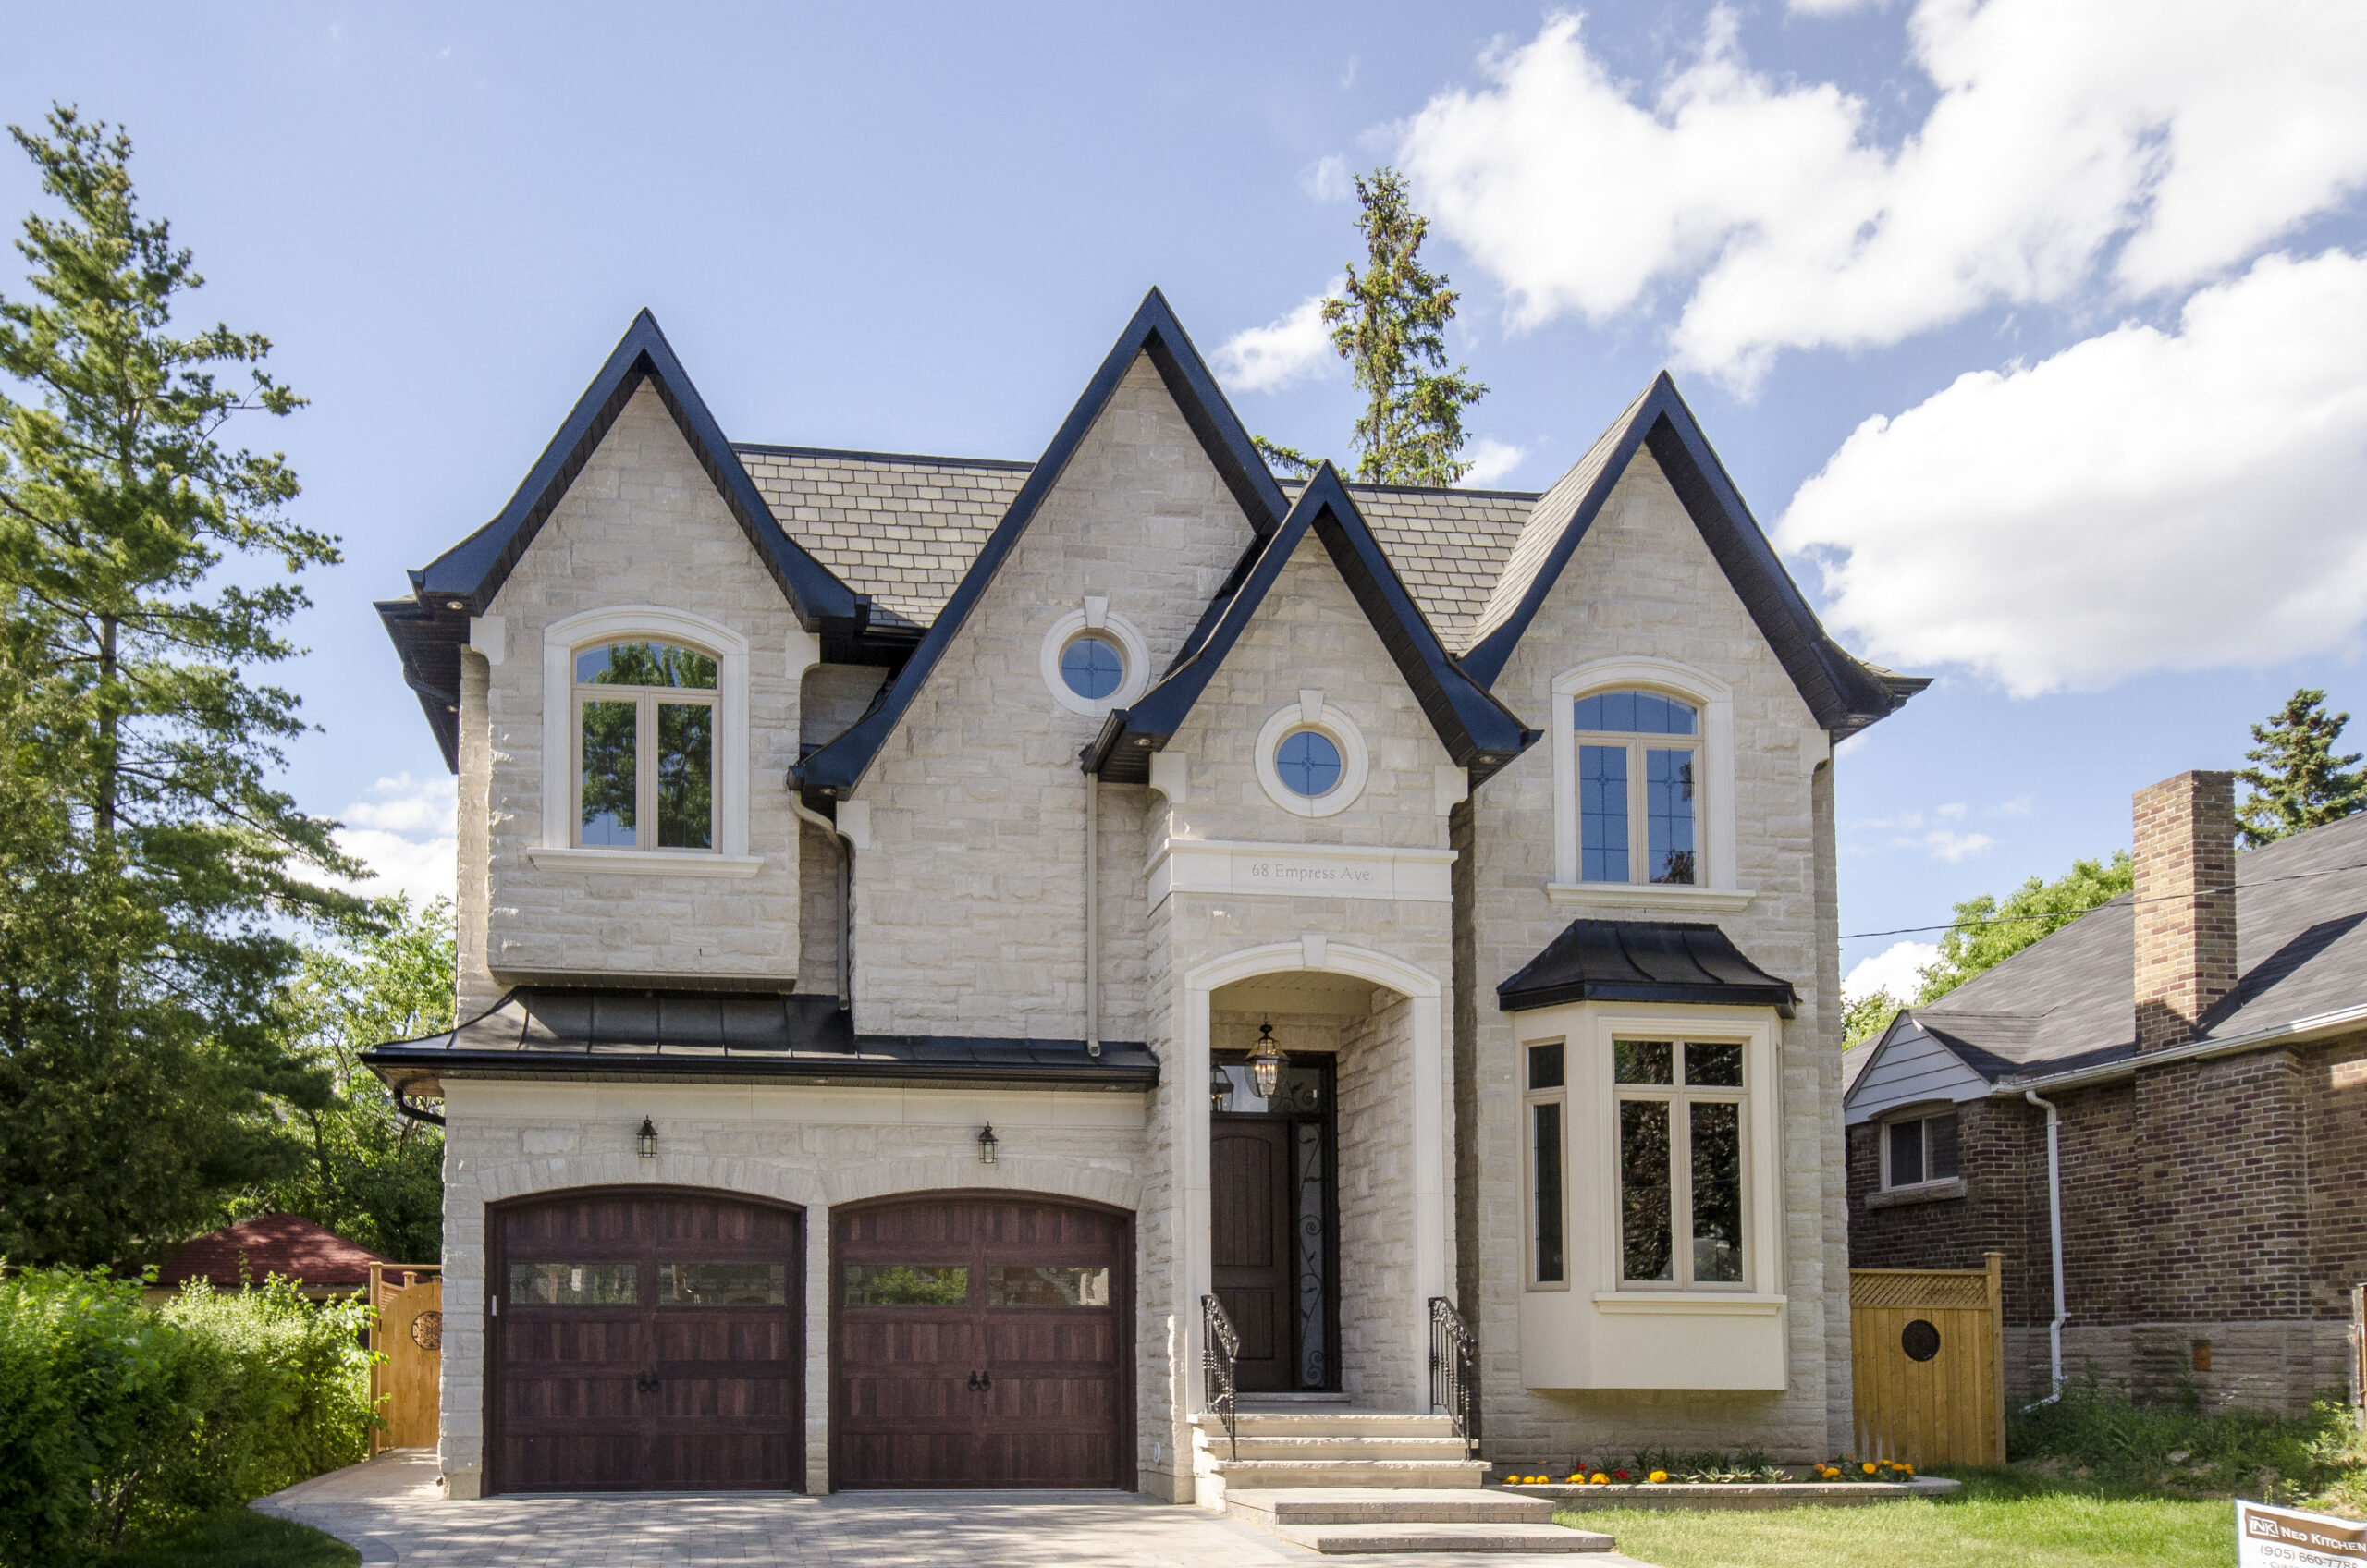 Empress Avenue Custom Home in North York, Ontario